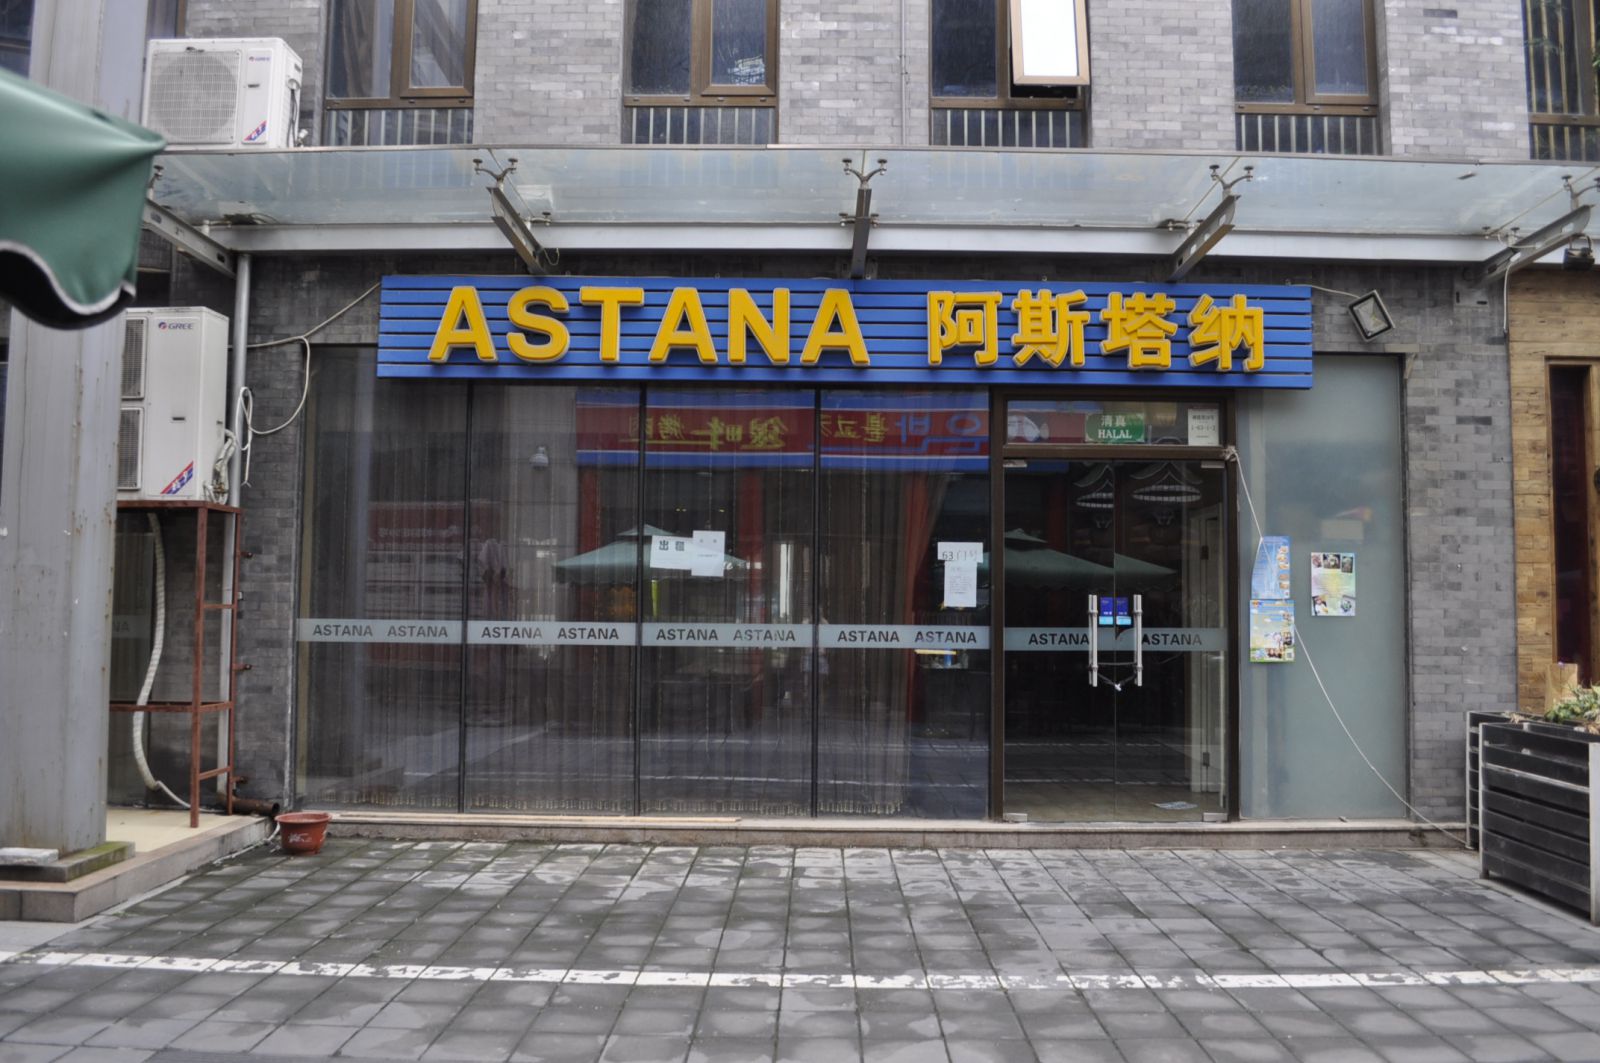 Astana Restaurant, Beijing